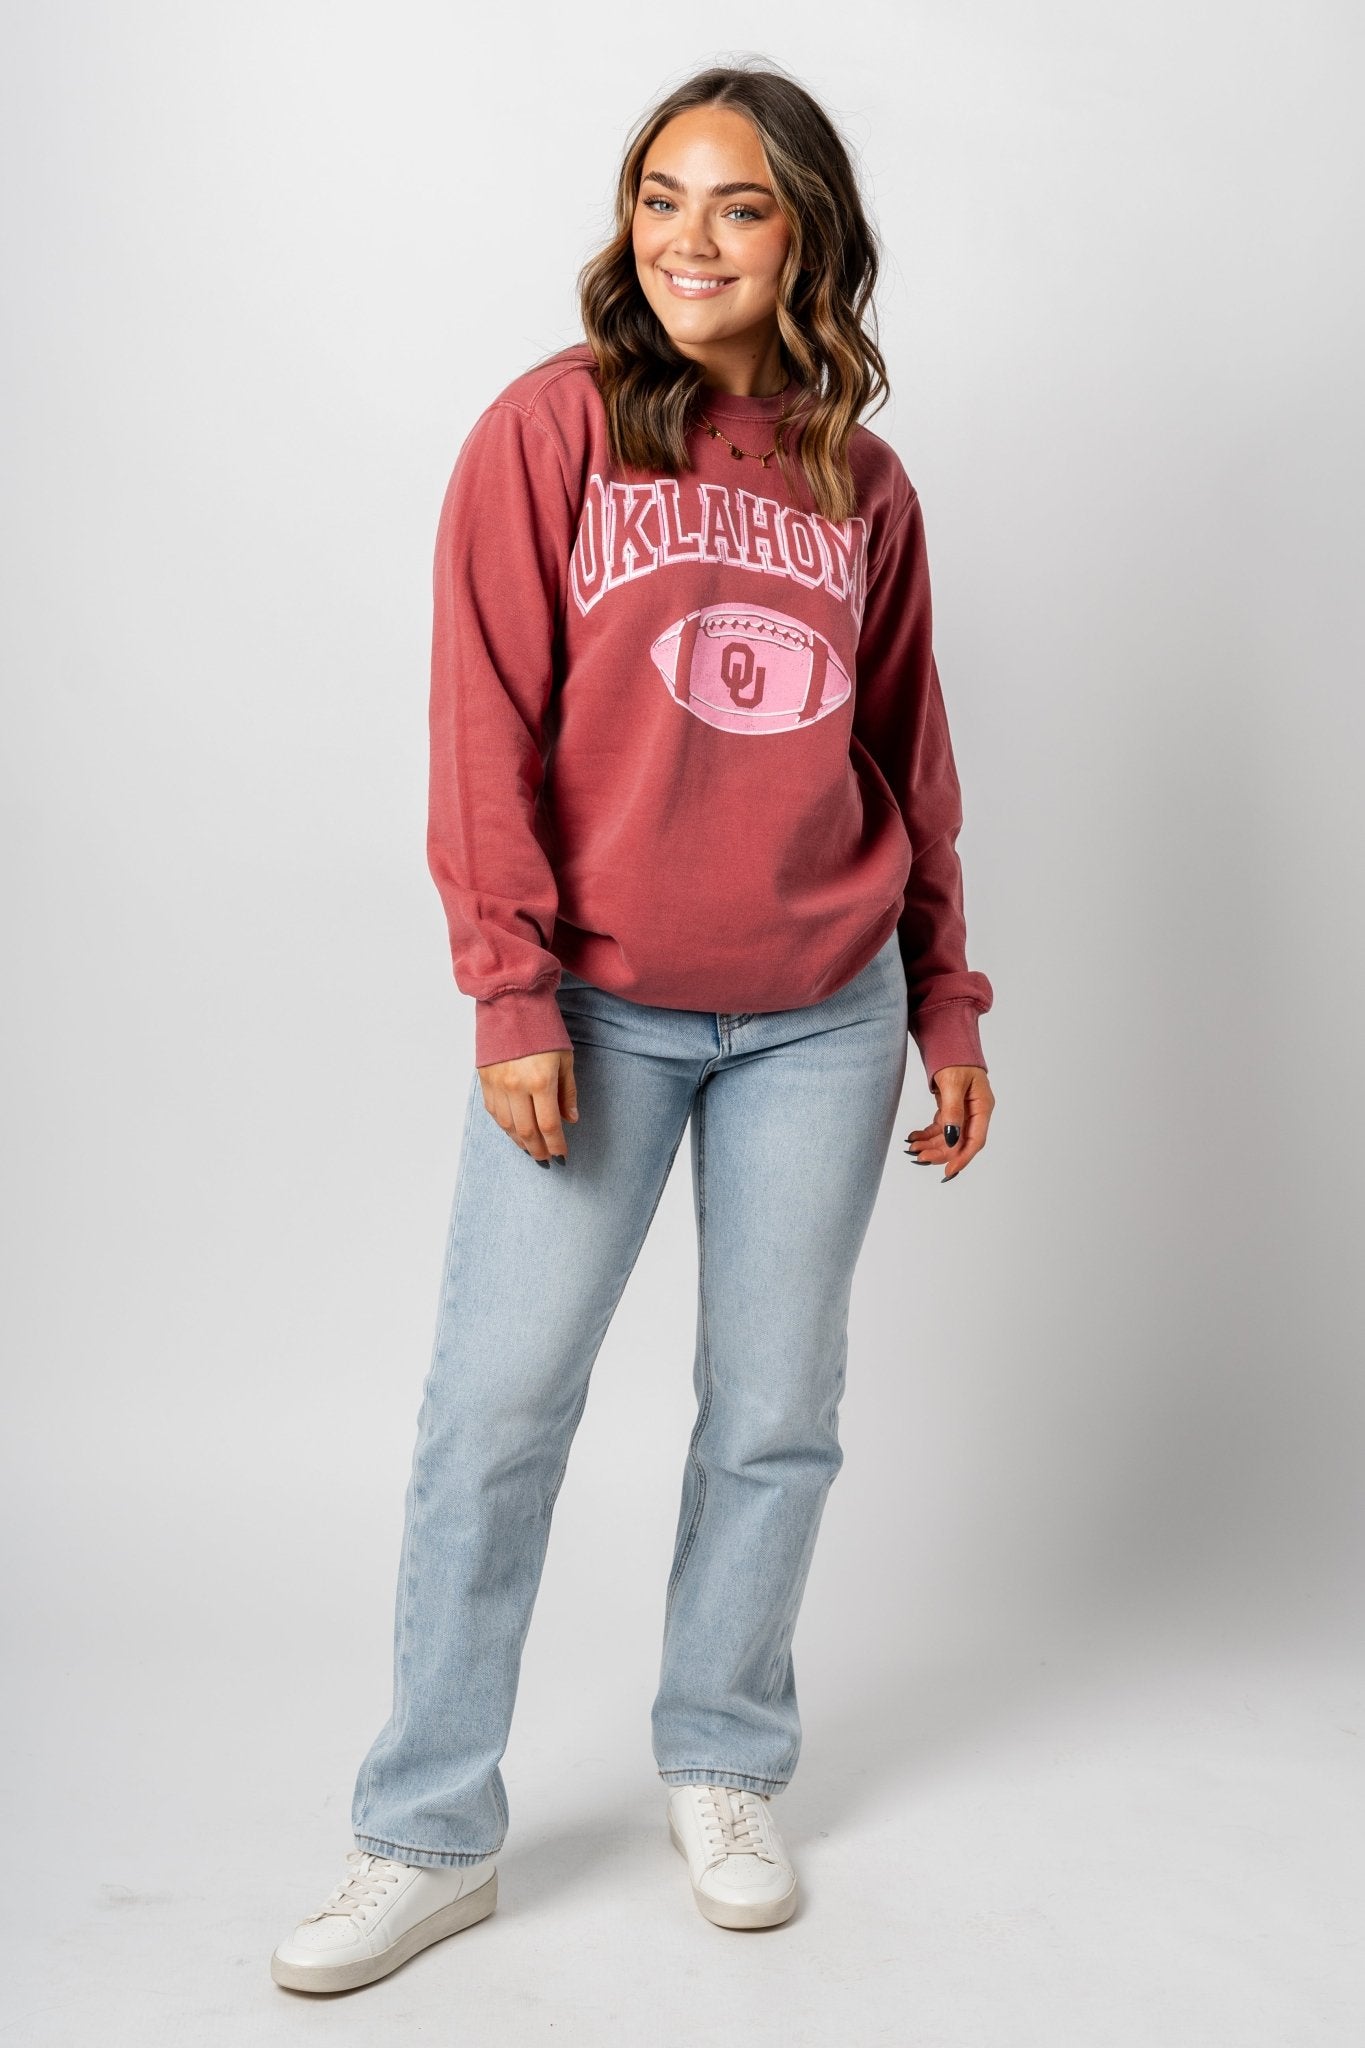 OU OU Wonka football comfort color sweatshirt crimson t-shirt | Lush Fashion Lounge Trendy Oklahoma University Sooners Apparel & Cute Gameday T-Shirts